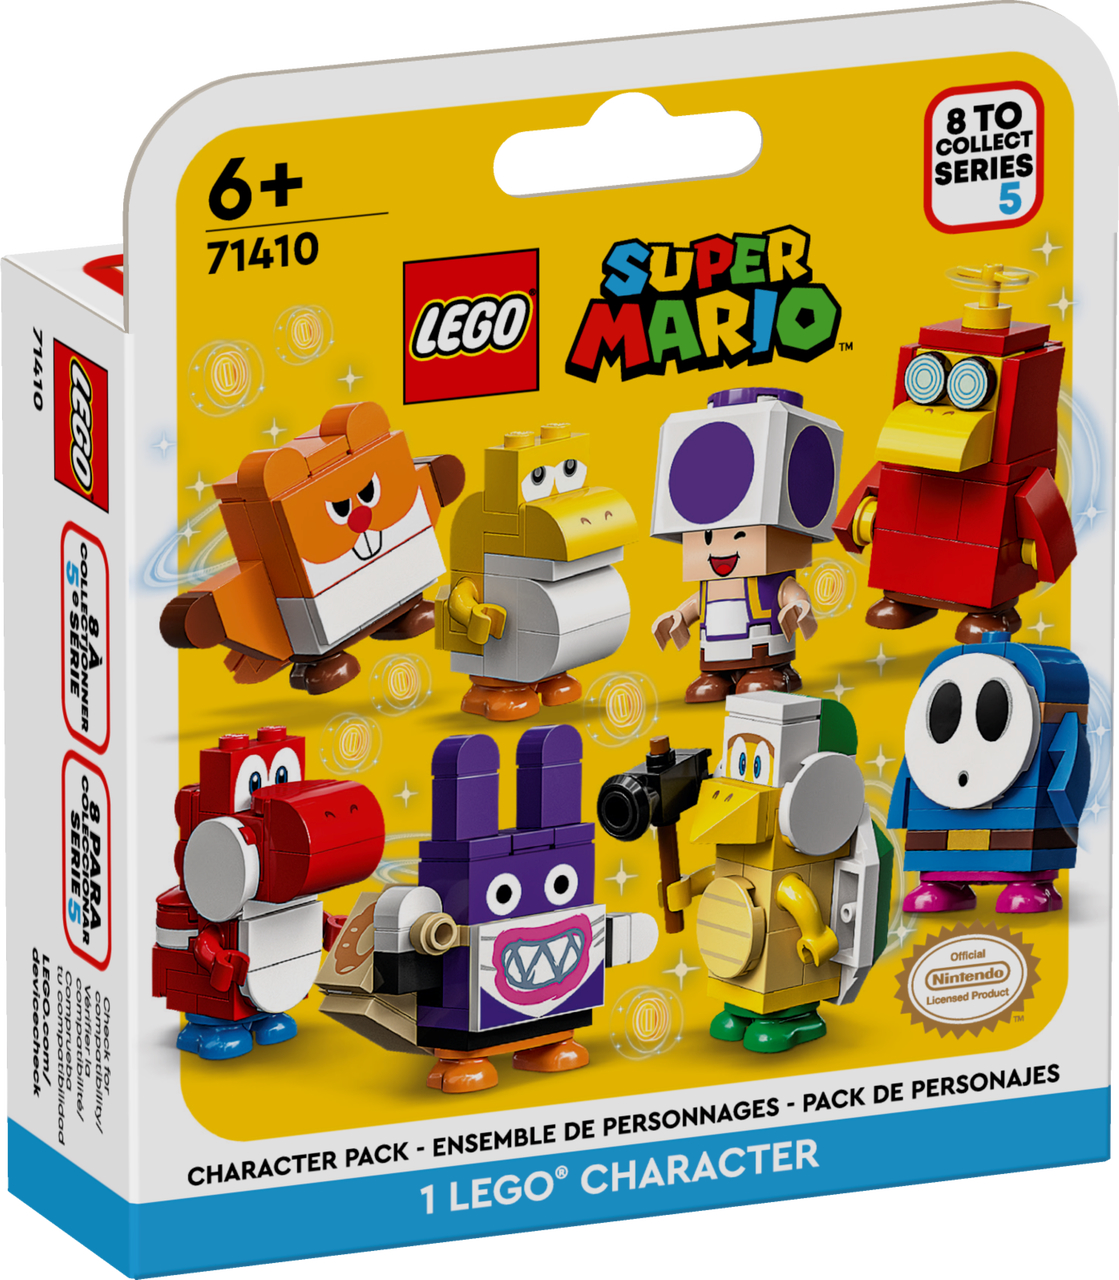 Packs de Personajes: Serie 6 Lego Super Mario